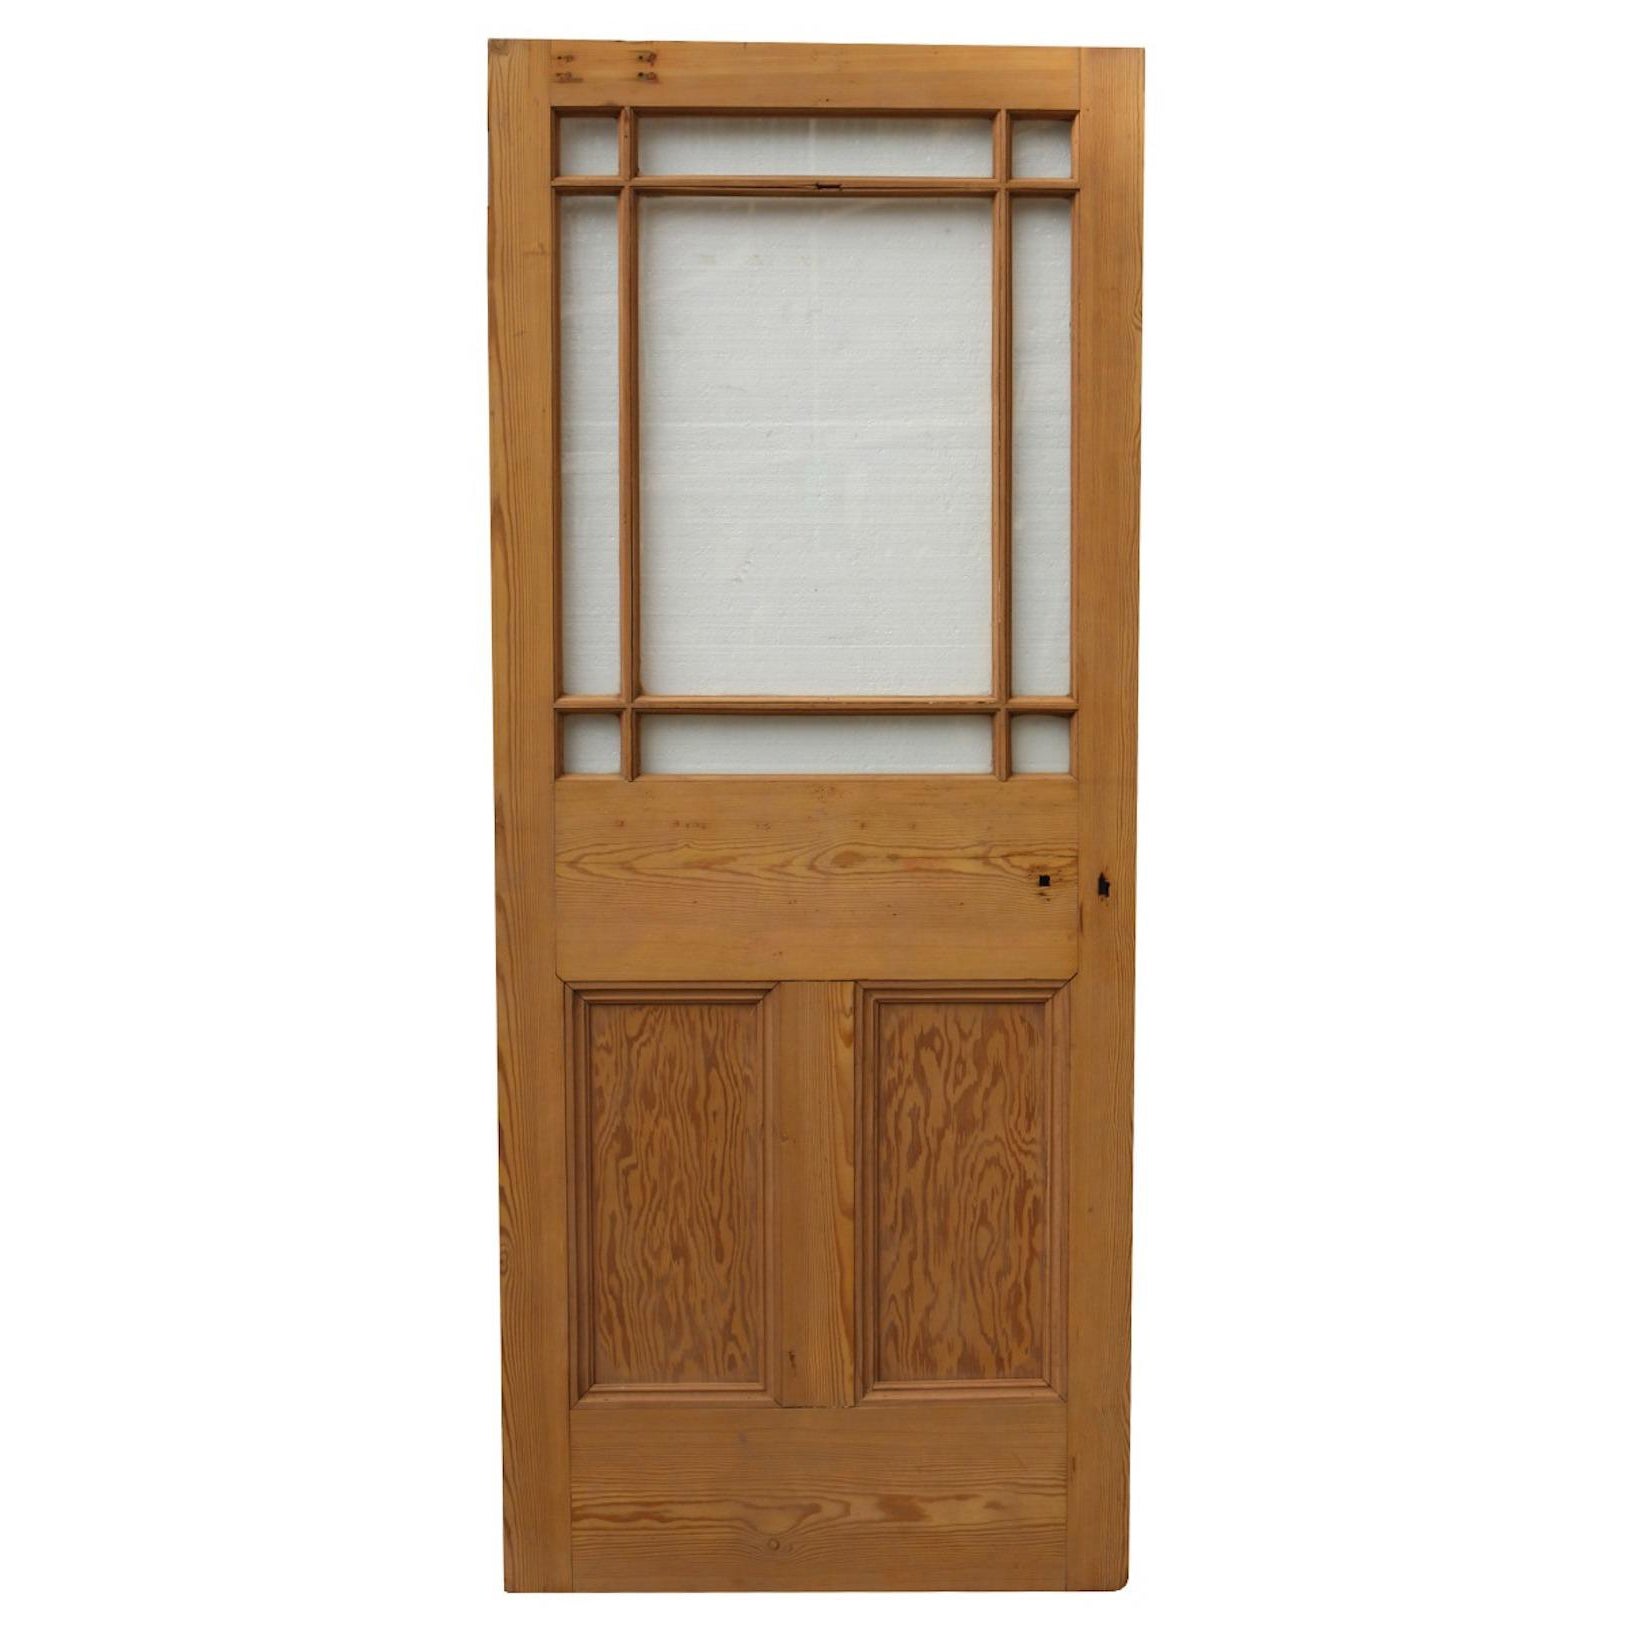 Reclaimed Glazed Internal Door For Sale